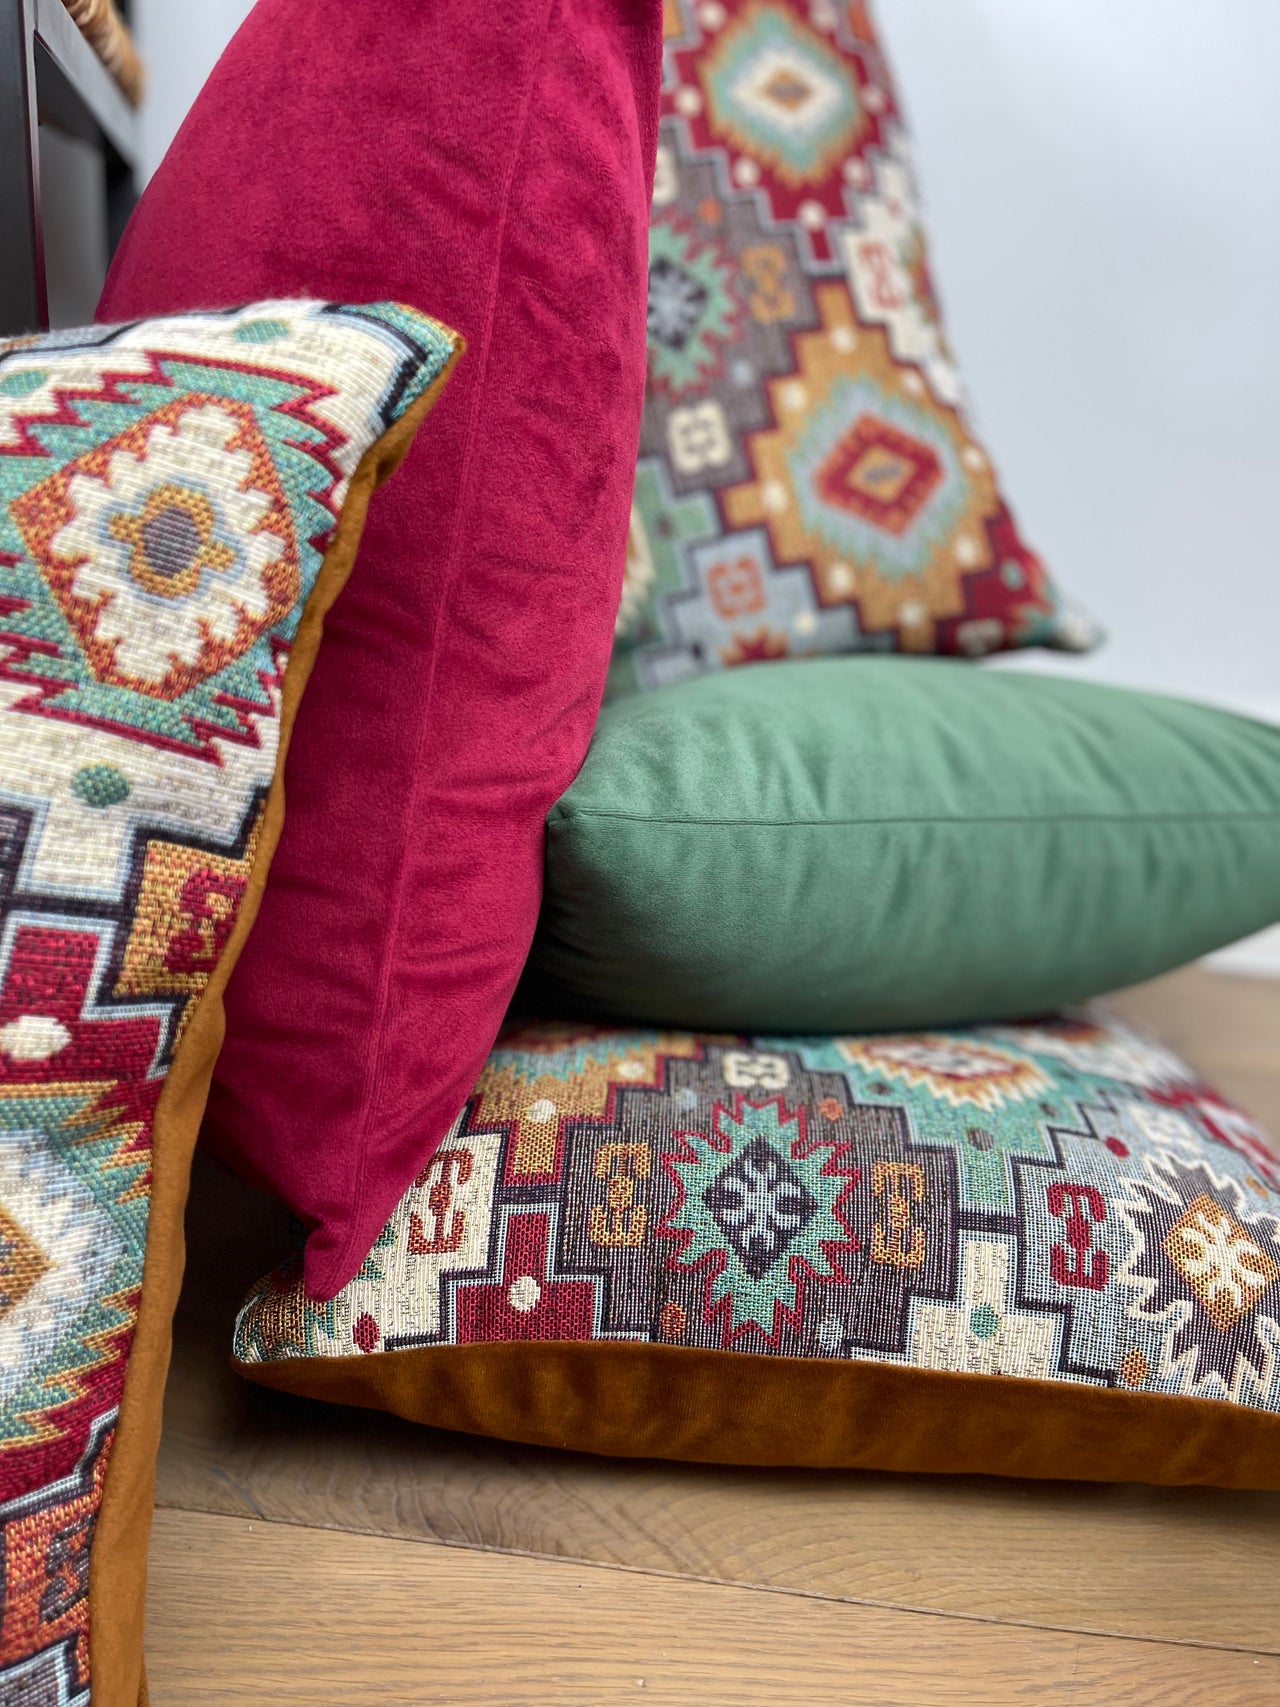 Ethnic Kilim Style Decorative Throw Pillow Case Vintage Charm Cushion Cover